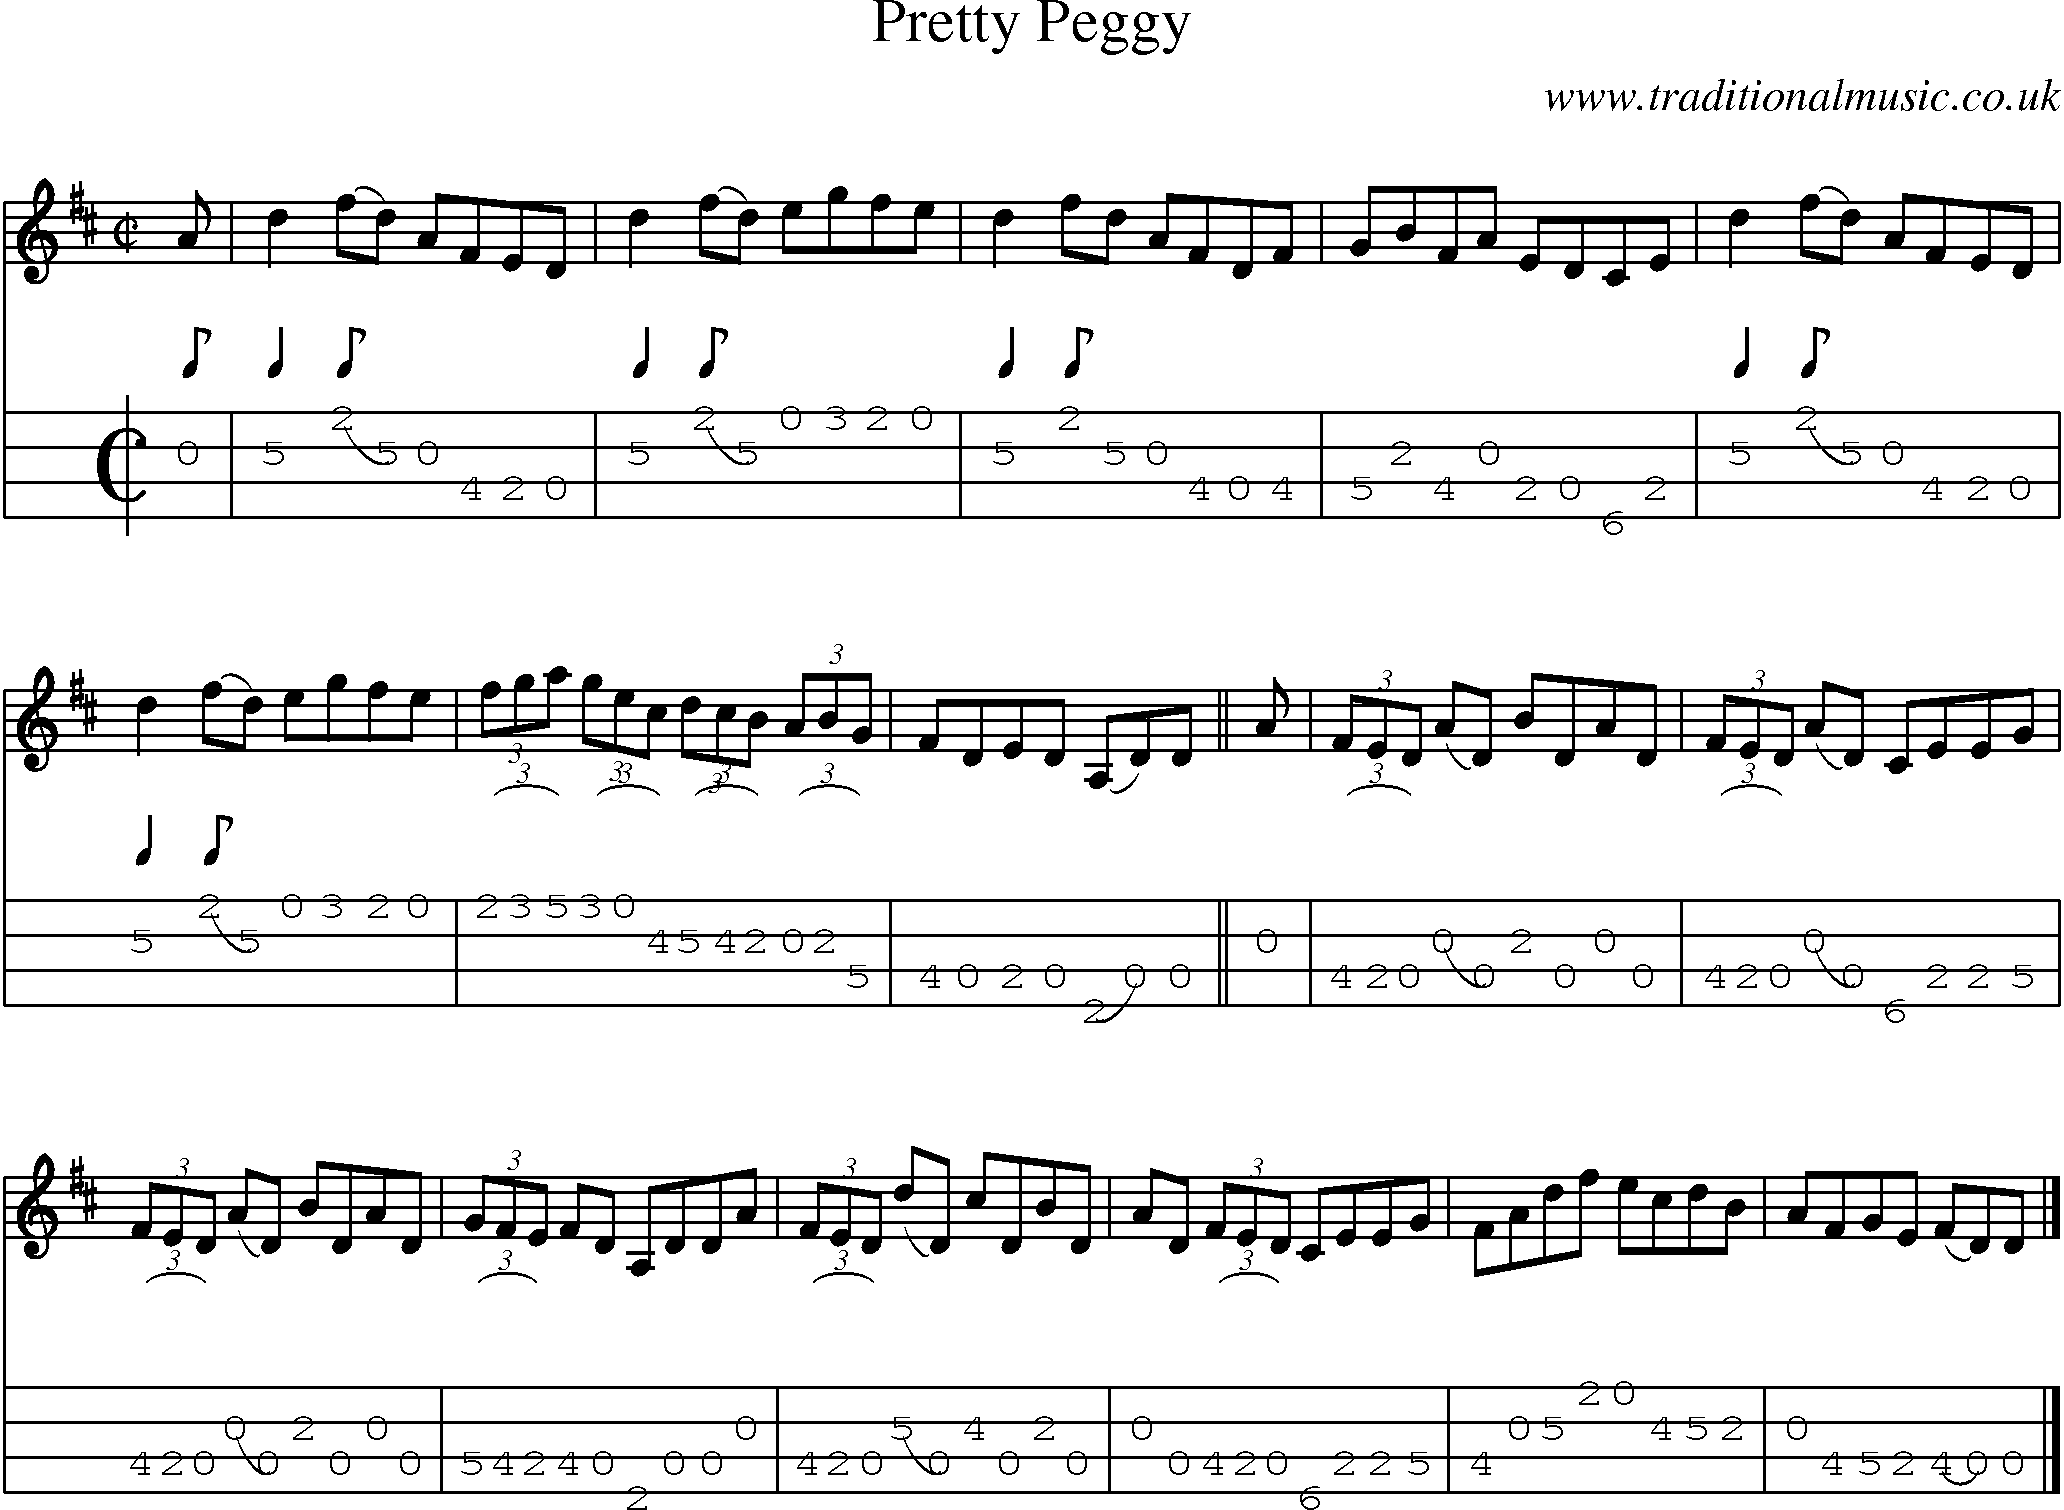 Music Score and Mandolin Tabs for Pretty Peggy